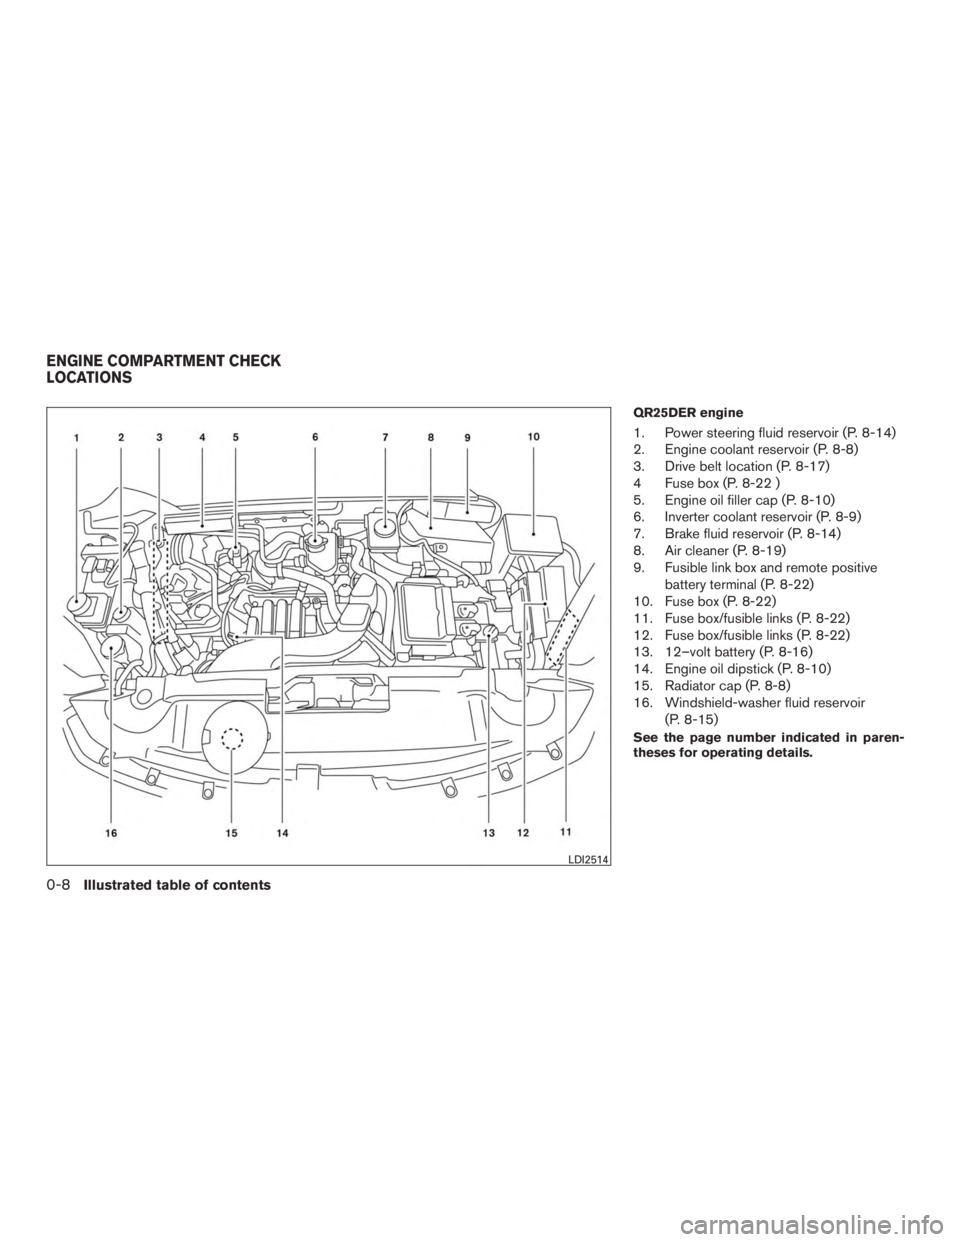 INFINITI QX60 HYBRID 2015  Owners Manual QR25DER engine
1. Power steering fluid reservoir (P. 8-14)
2. Engine coolant reservoir (P. 8-8)
3. Drive belt location (P. 8-17)
4 Fuse box (P. 8-22 )
5. Engine oil filler cap (P. 8-10)
6. Inverter co